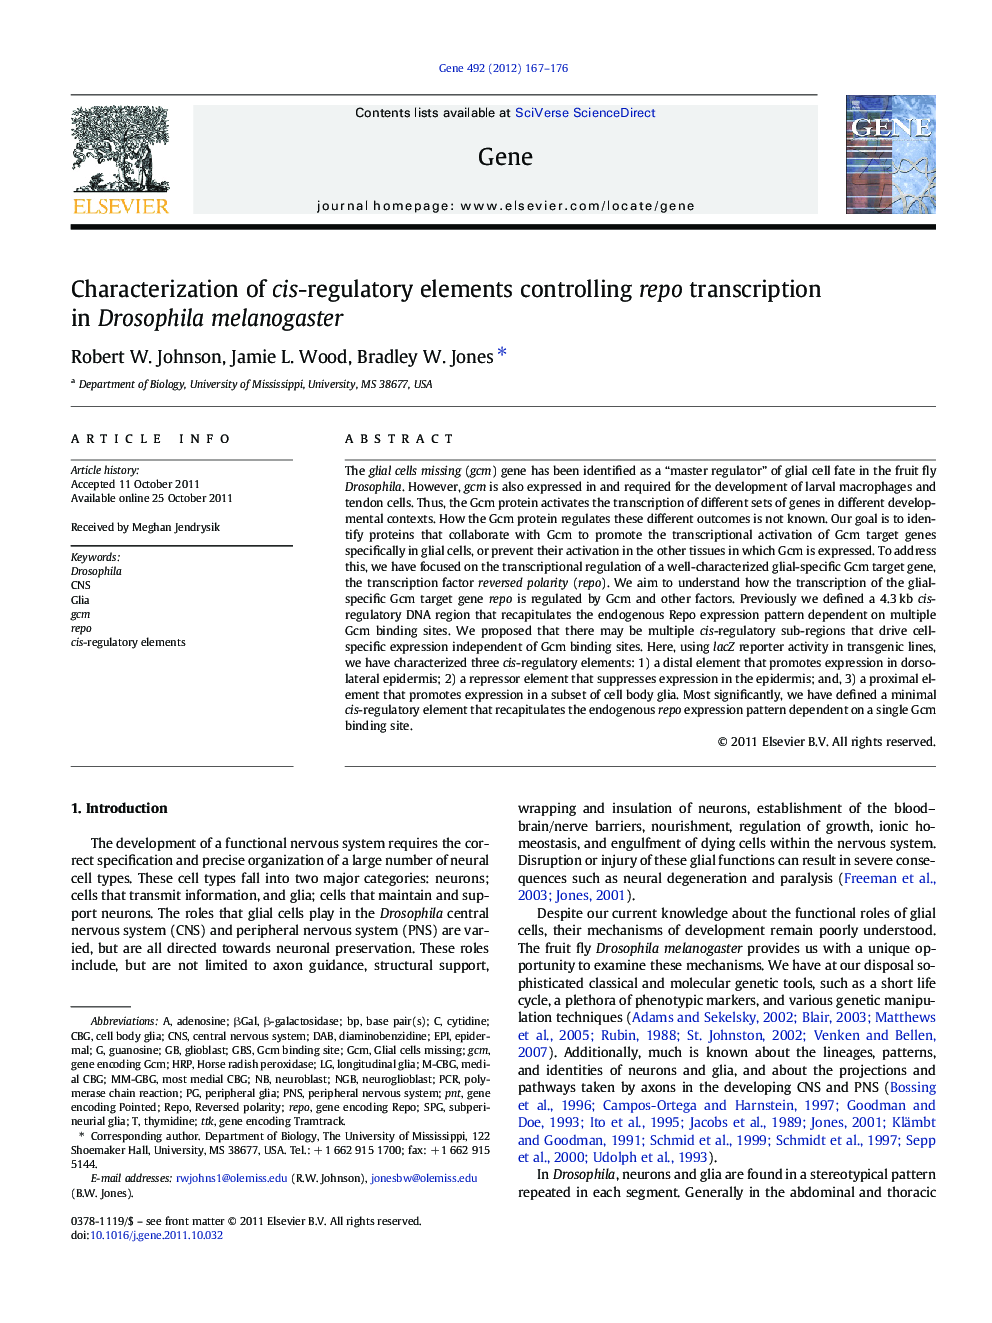 Characterization of cis-regulatory elements controlling repo transcription in Drosophila melanogaster